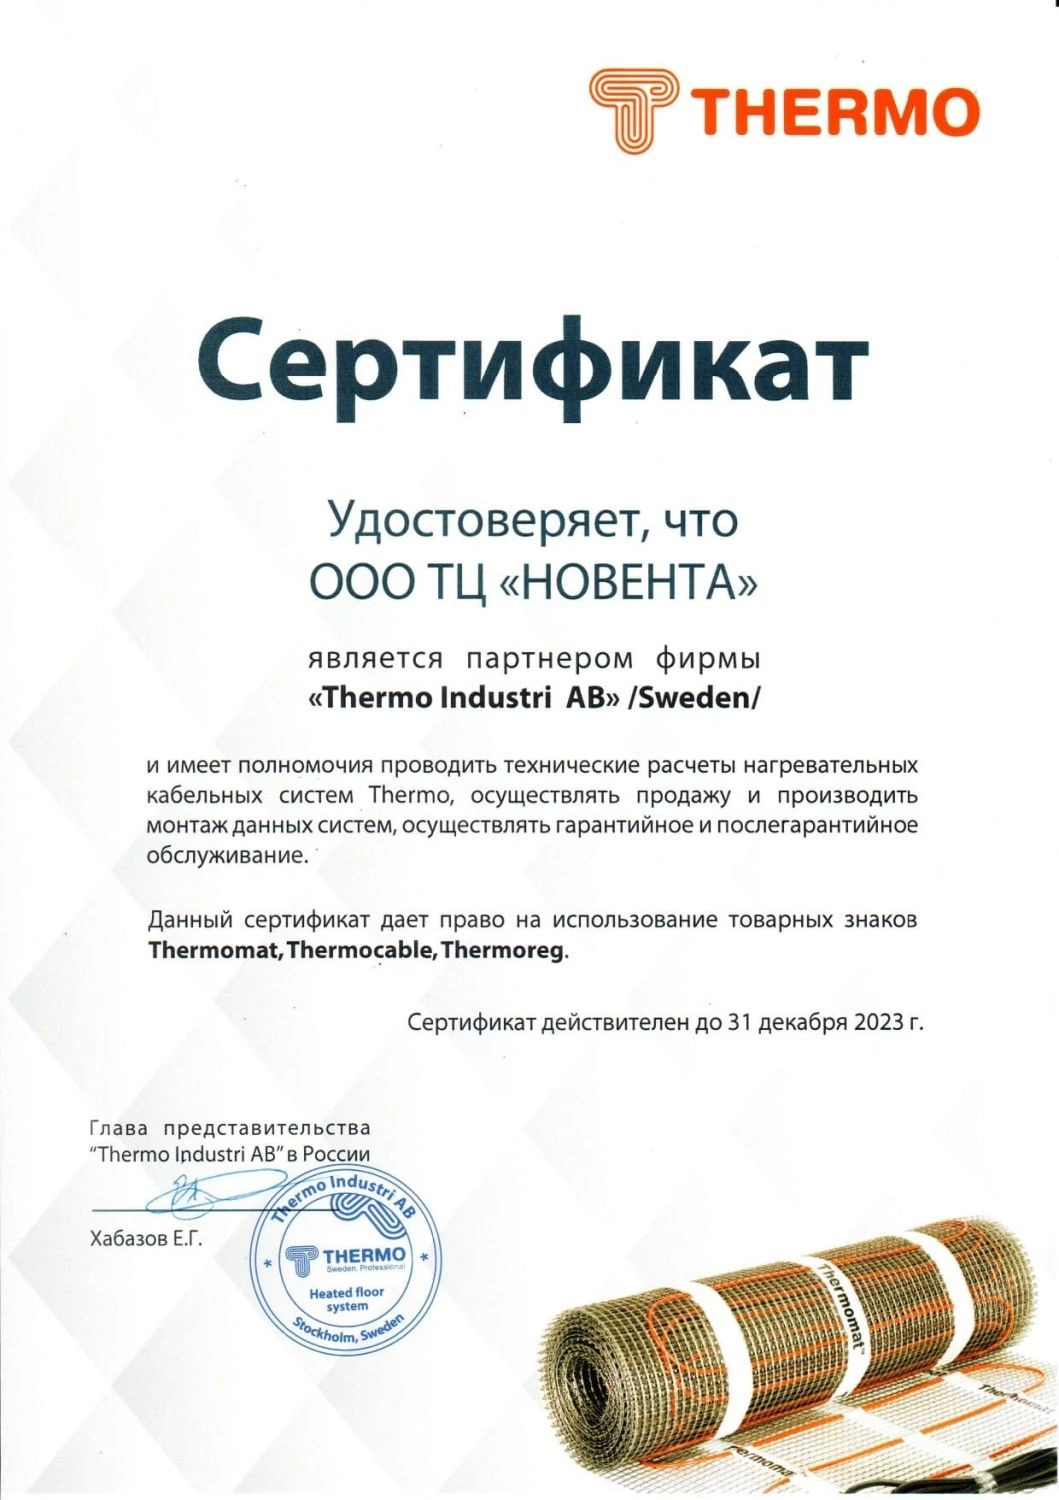 Сертификат официального дистрибьютора Thermo 2023